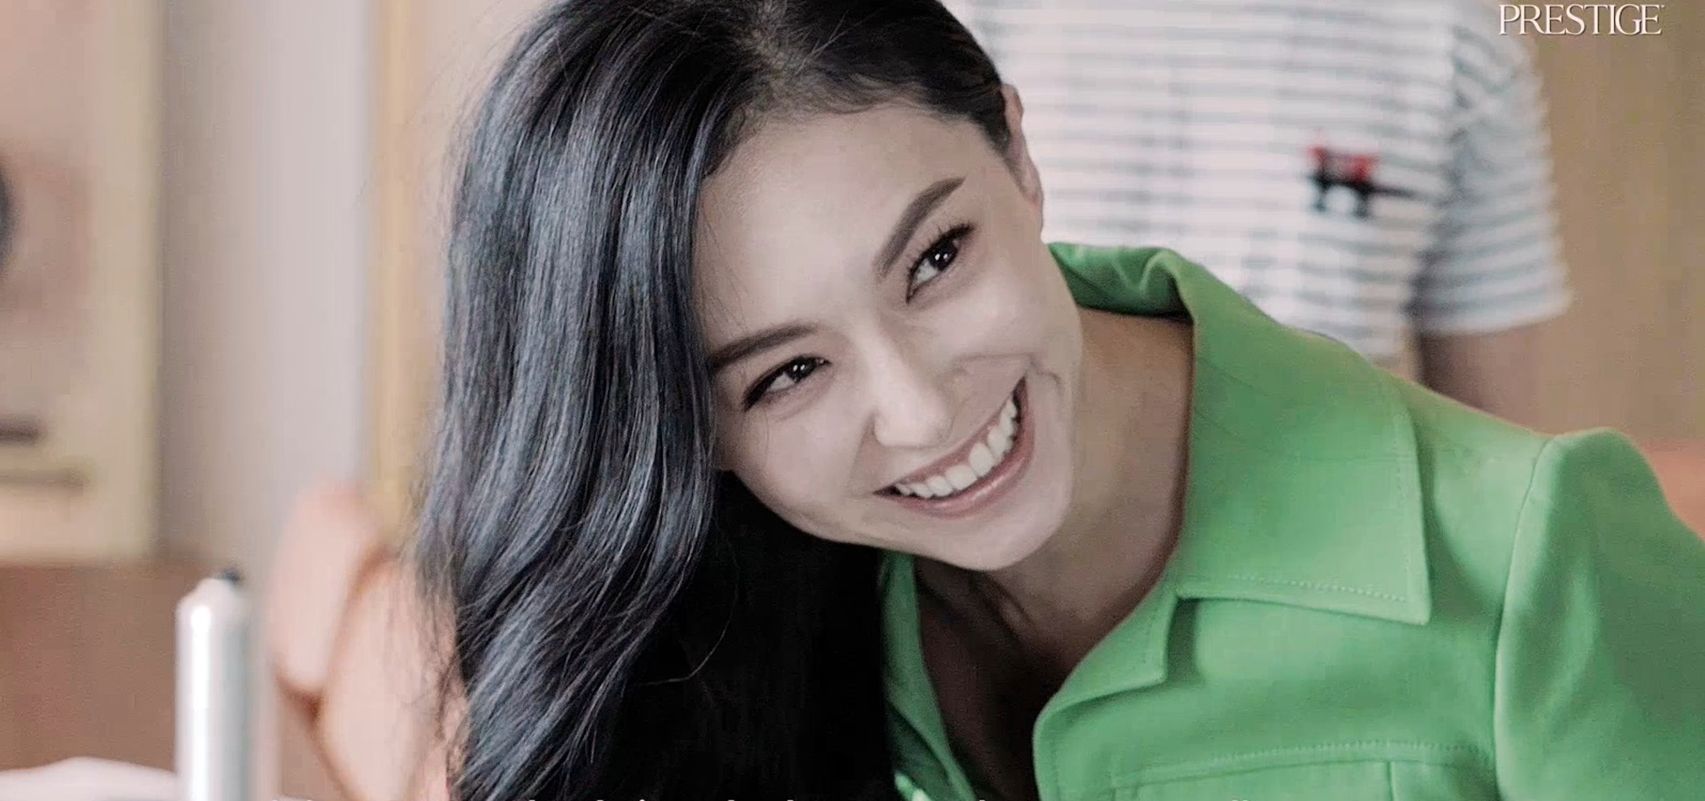 Startup Life: Rachel Lim, Co-Founder of Women's Fashion Brand Love, Bonito